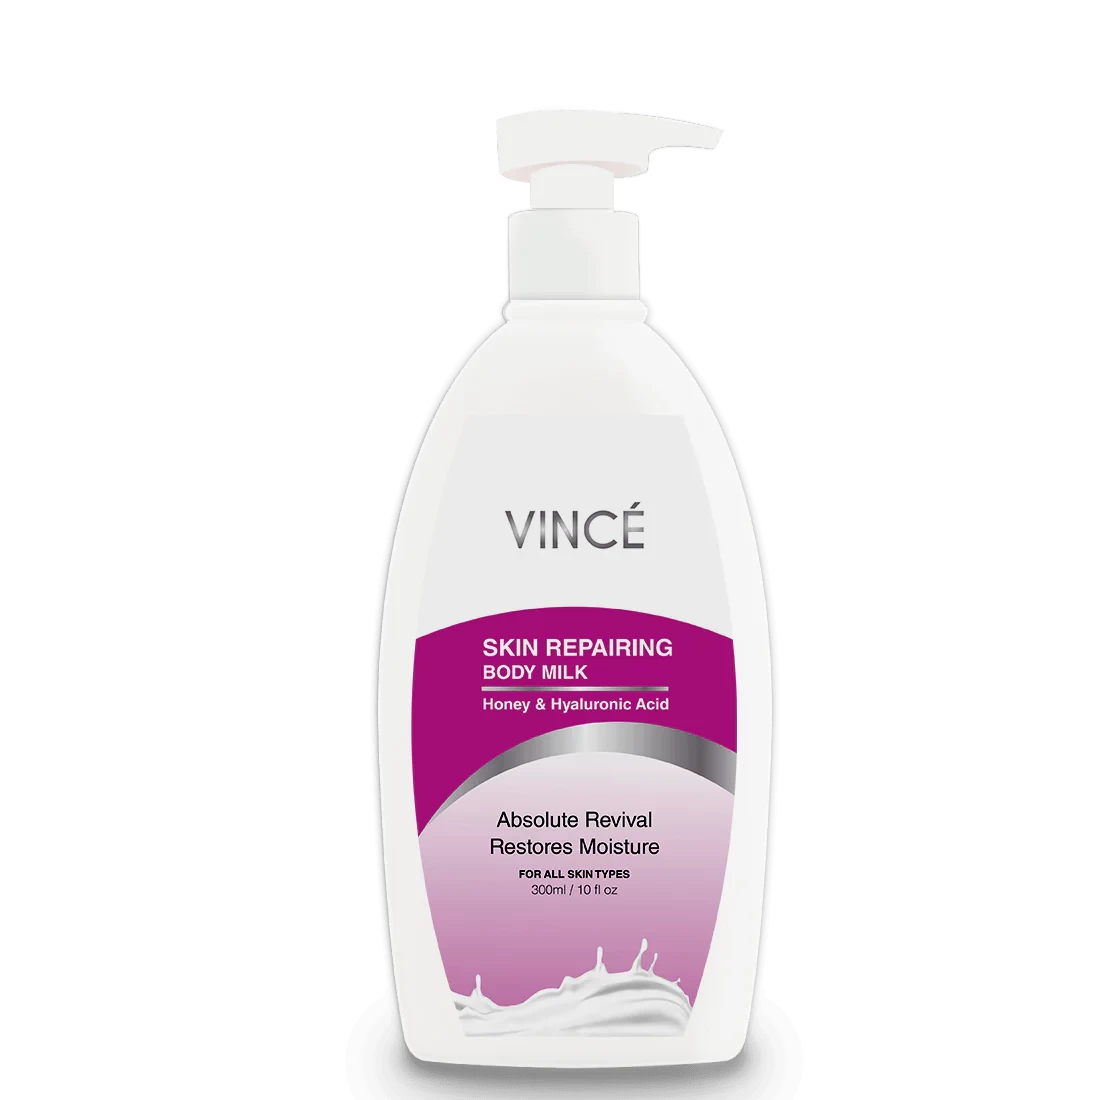 Vince Skin Repairing Body Milk